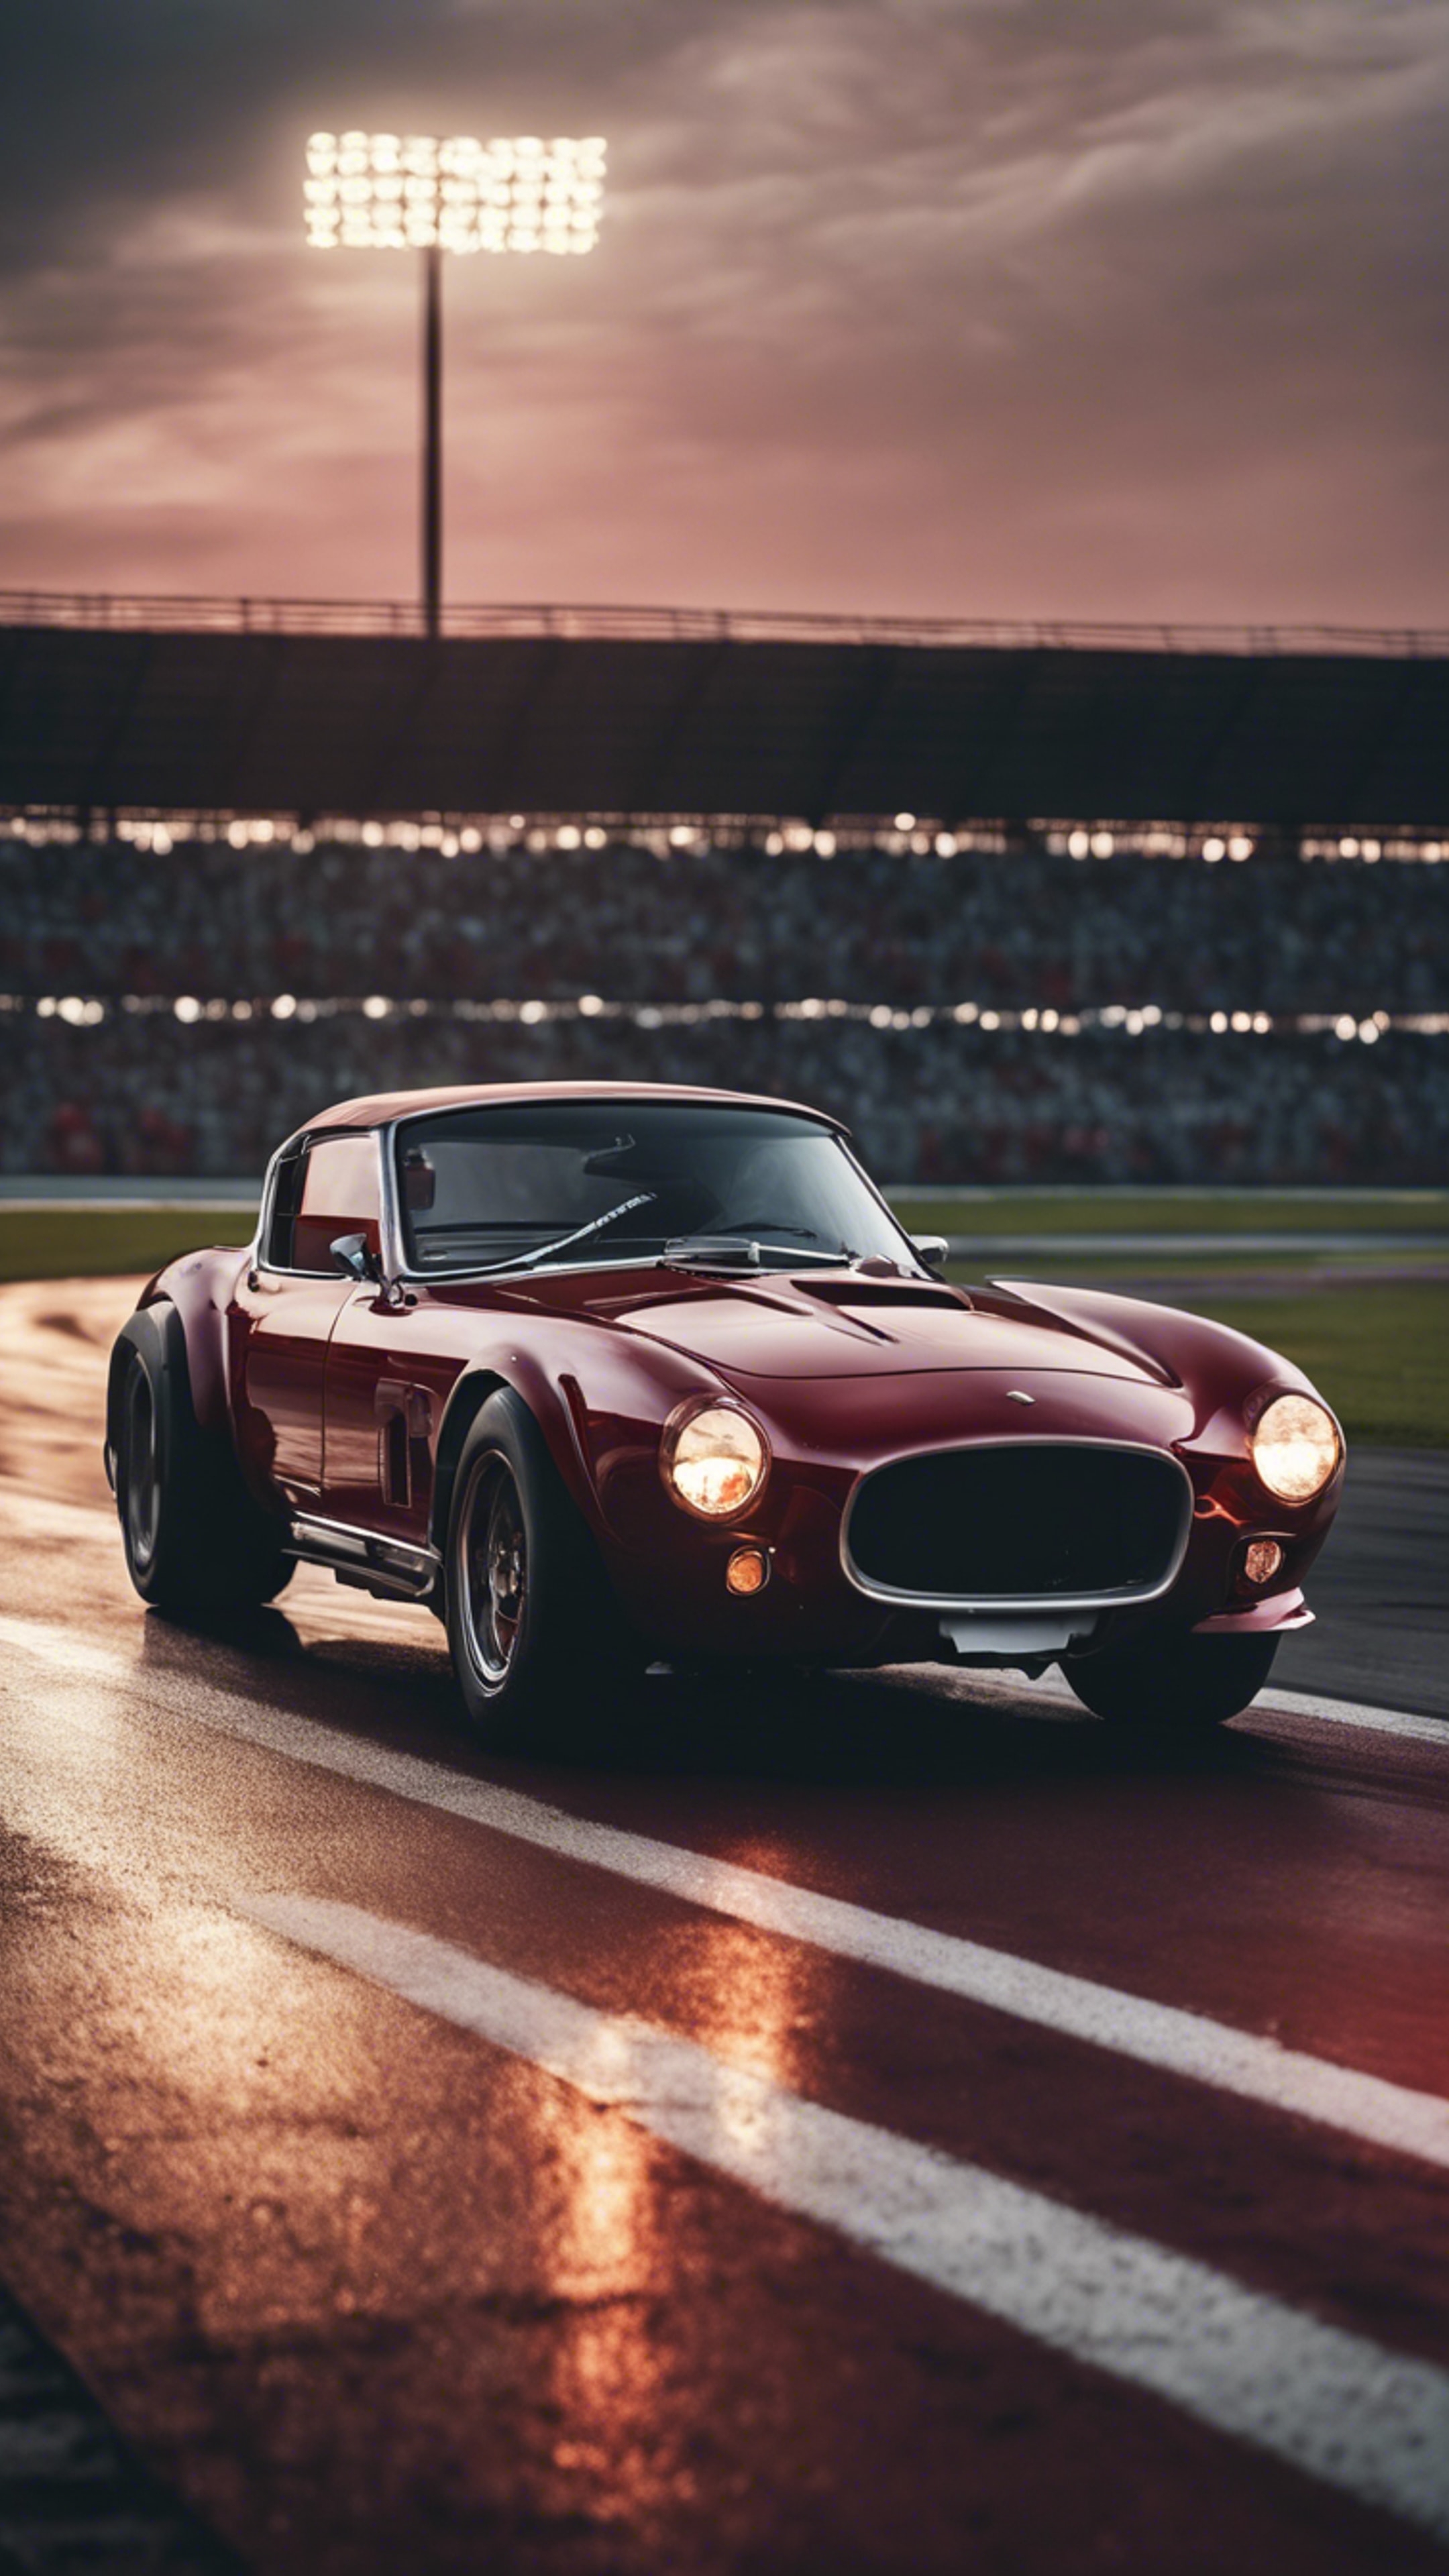 A richly toned dark red sports car racing on a track under the evening sky. ផ្ទាំង​រូបភាព[f7c86e5103c94fca80ae]